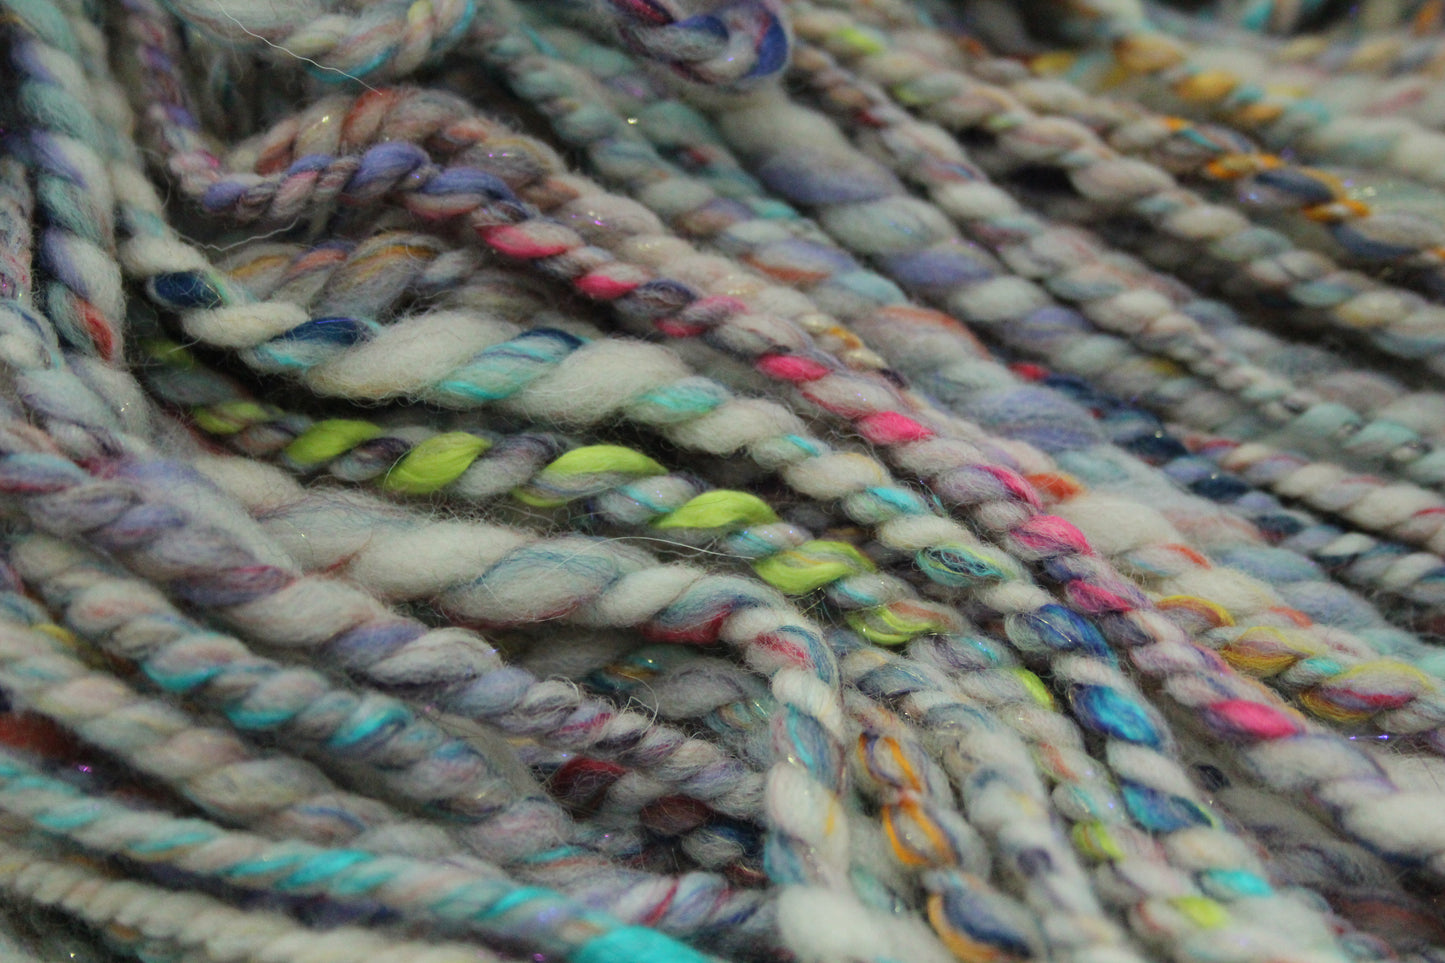 Handspun Yarn - White + Colour Mix - 56mtrs/62yards  156g/5.5oz - Yarn for crocheting. knitting, weaving...